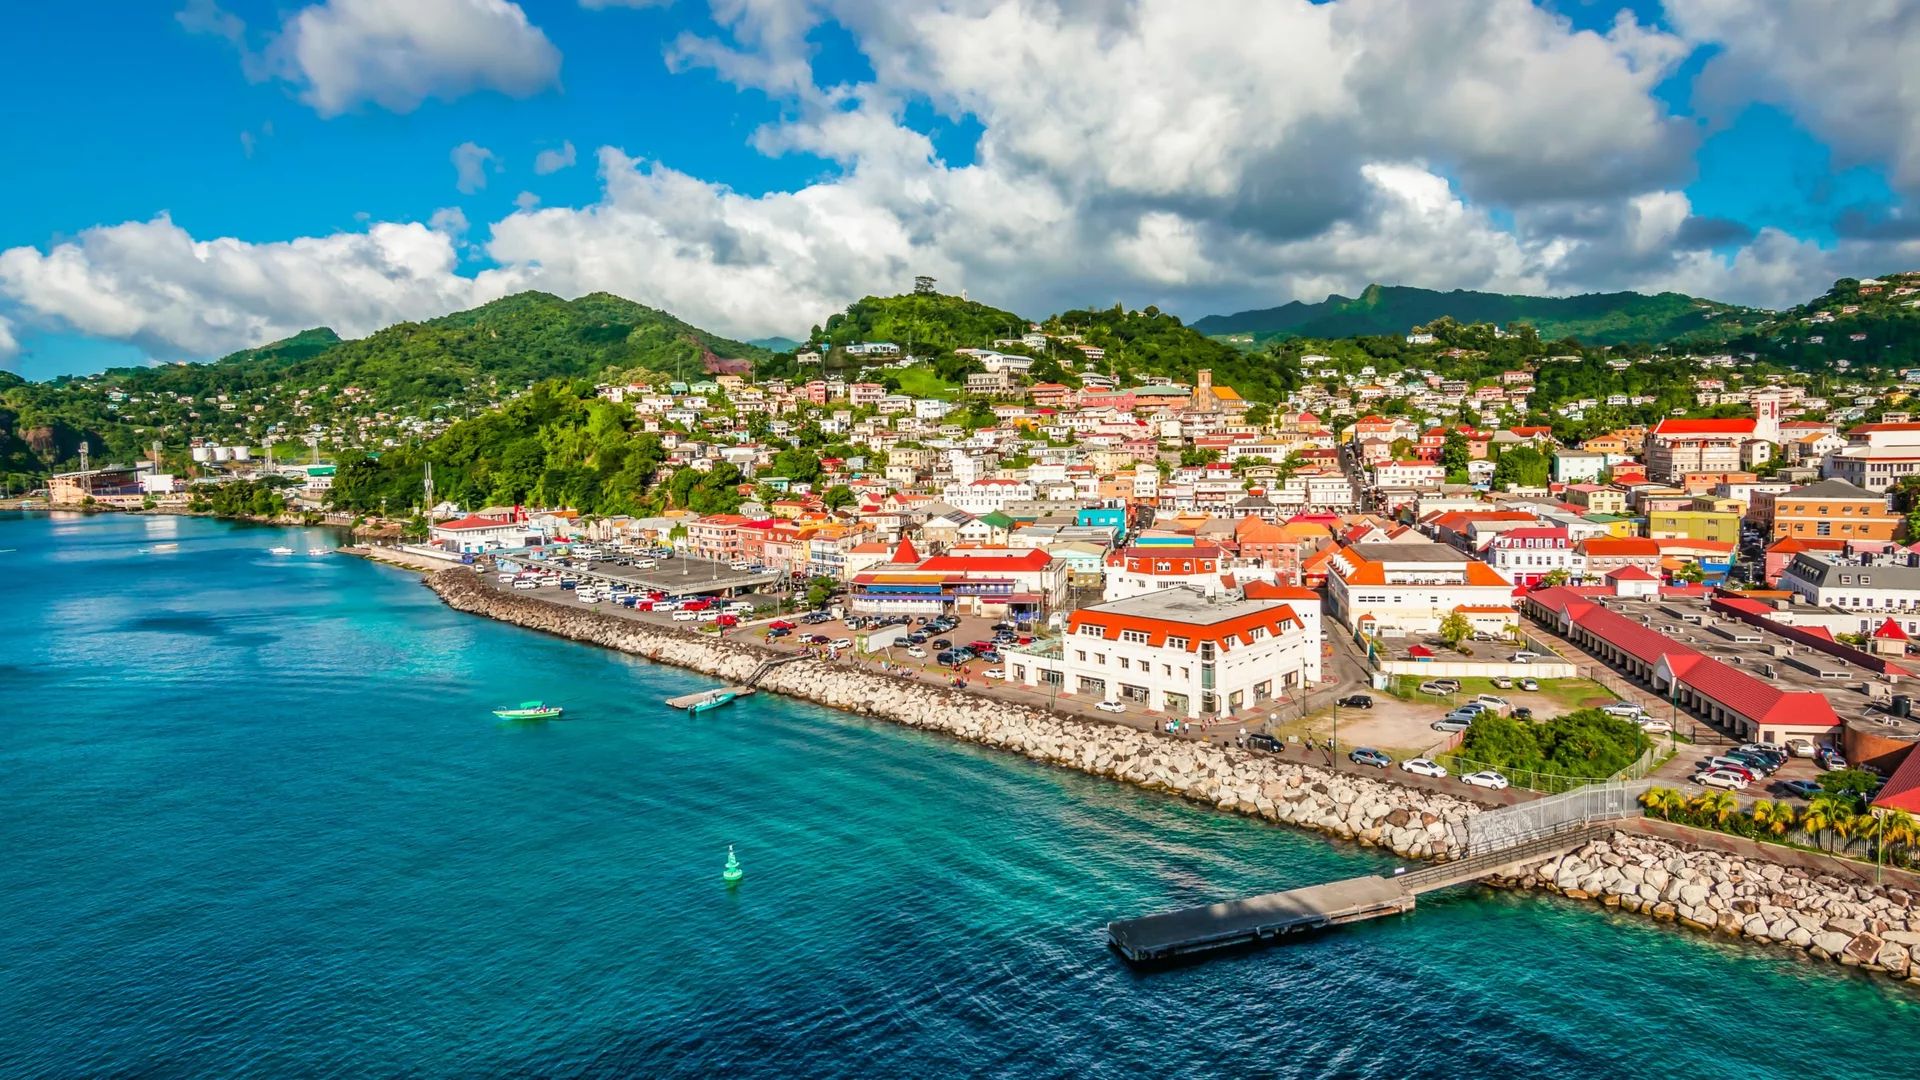 coast of the island of Grenada